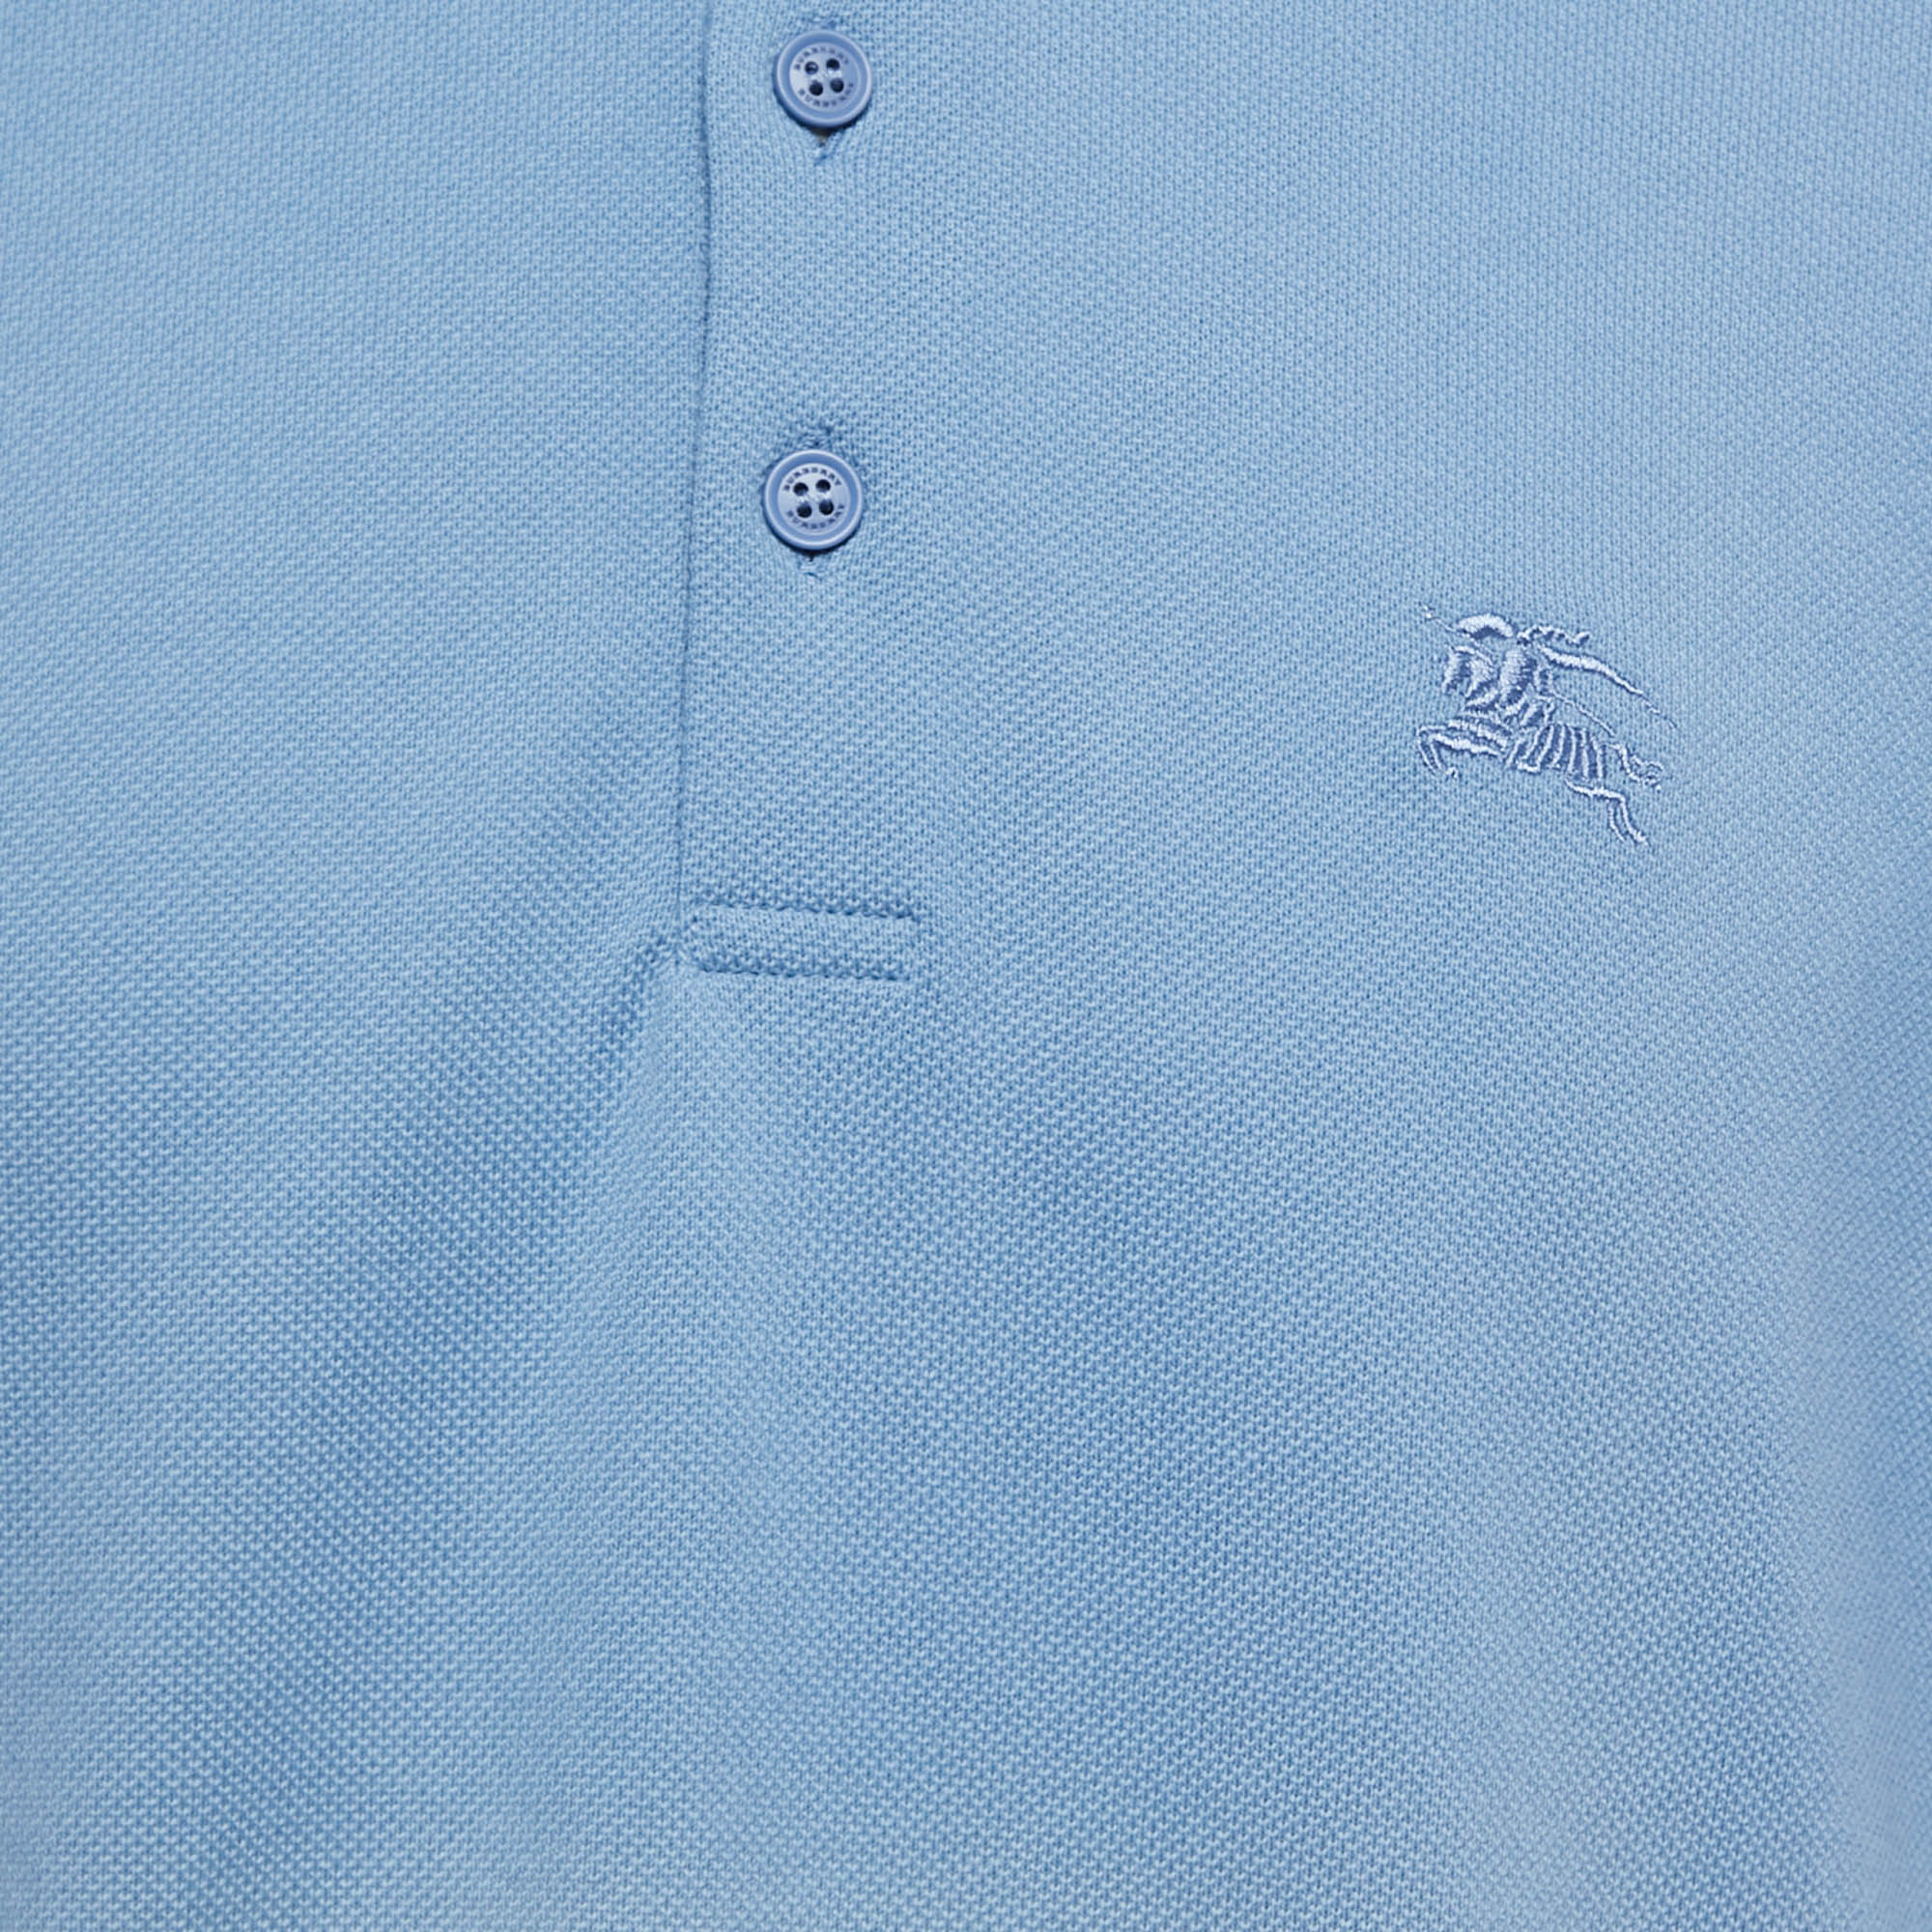 Burberry Blue Cotton Pique Short Sleeve Polo T-Shirt XXL